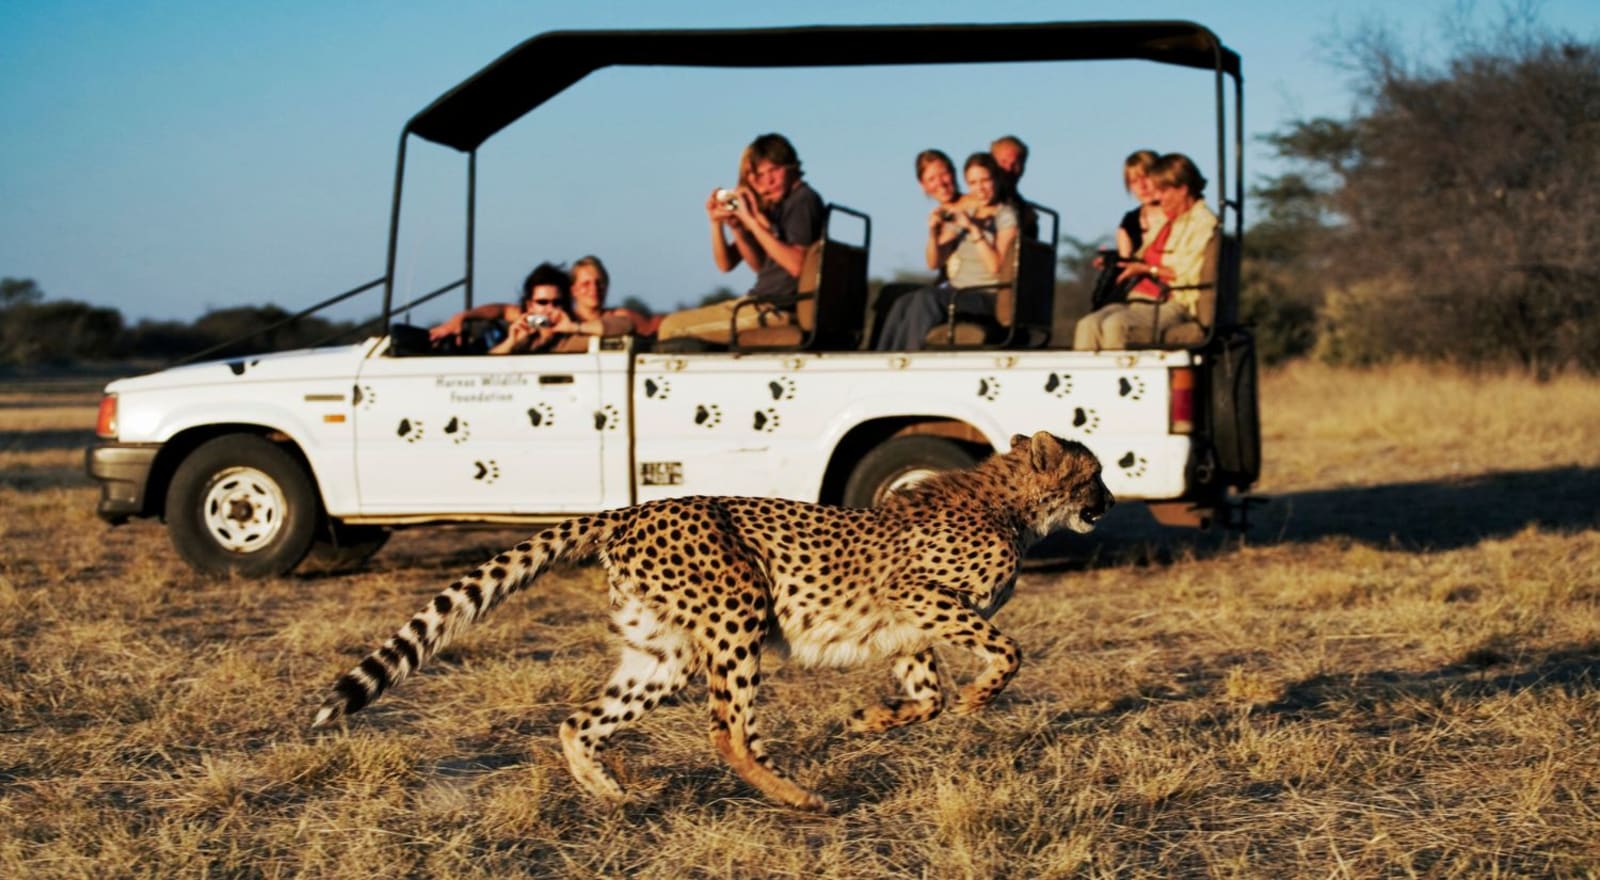 cheetah running past car full of people on a safari